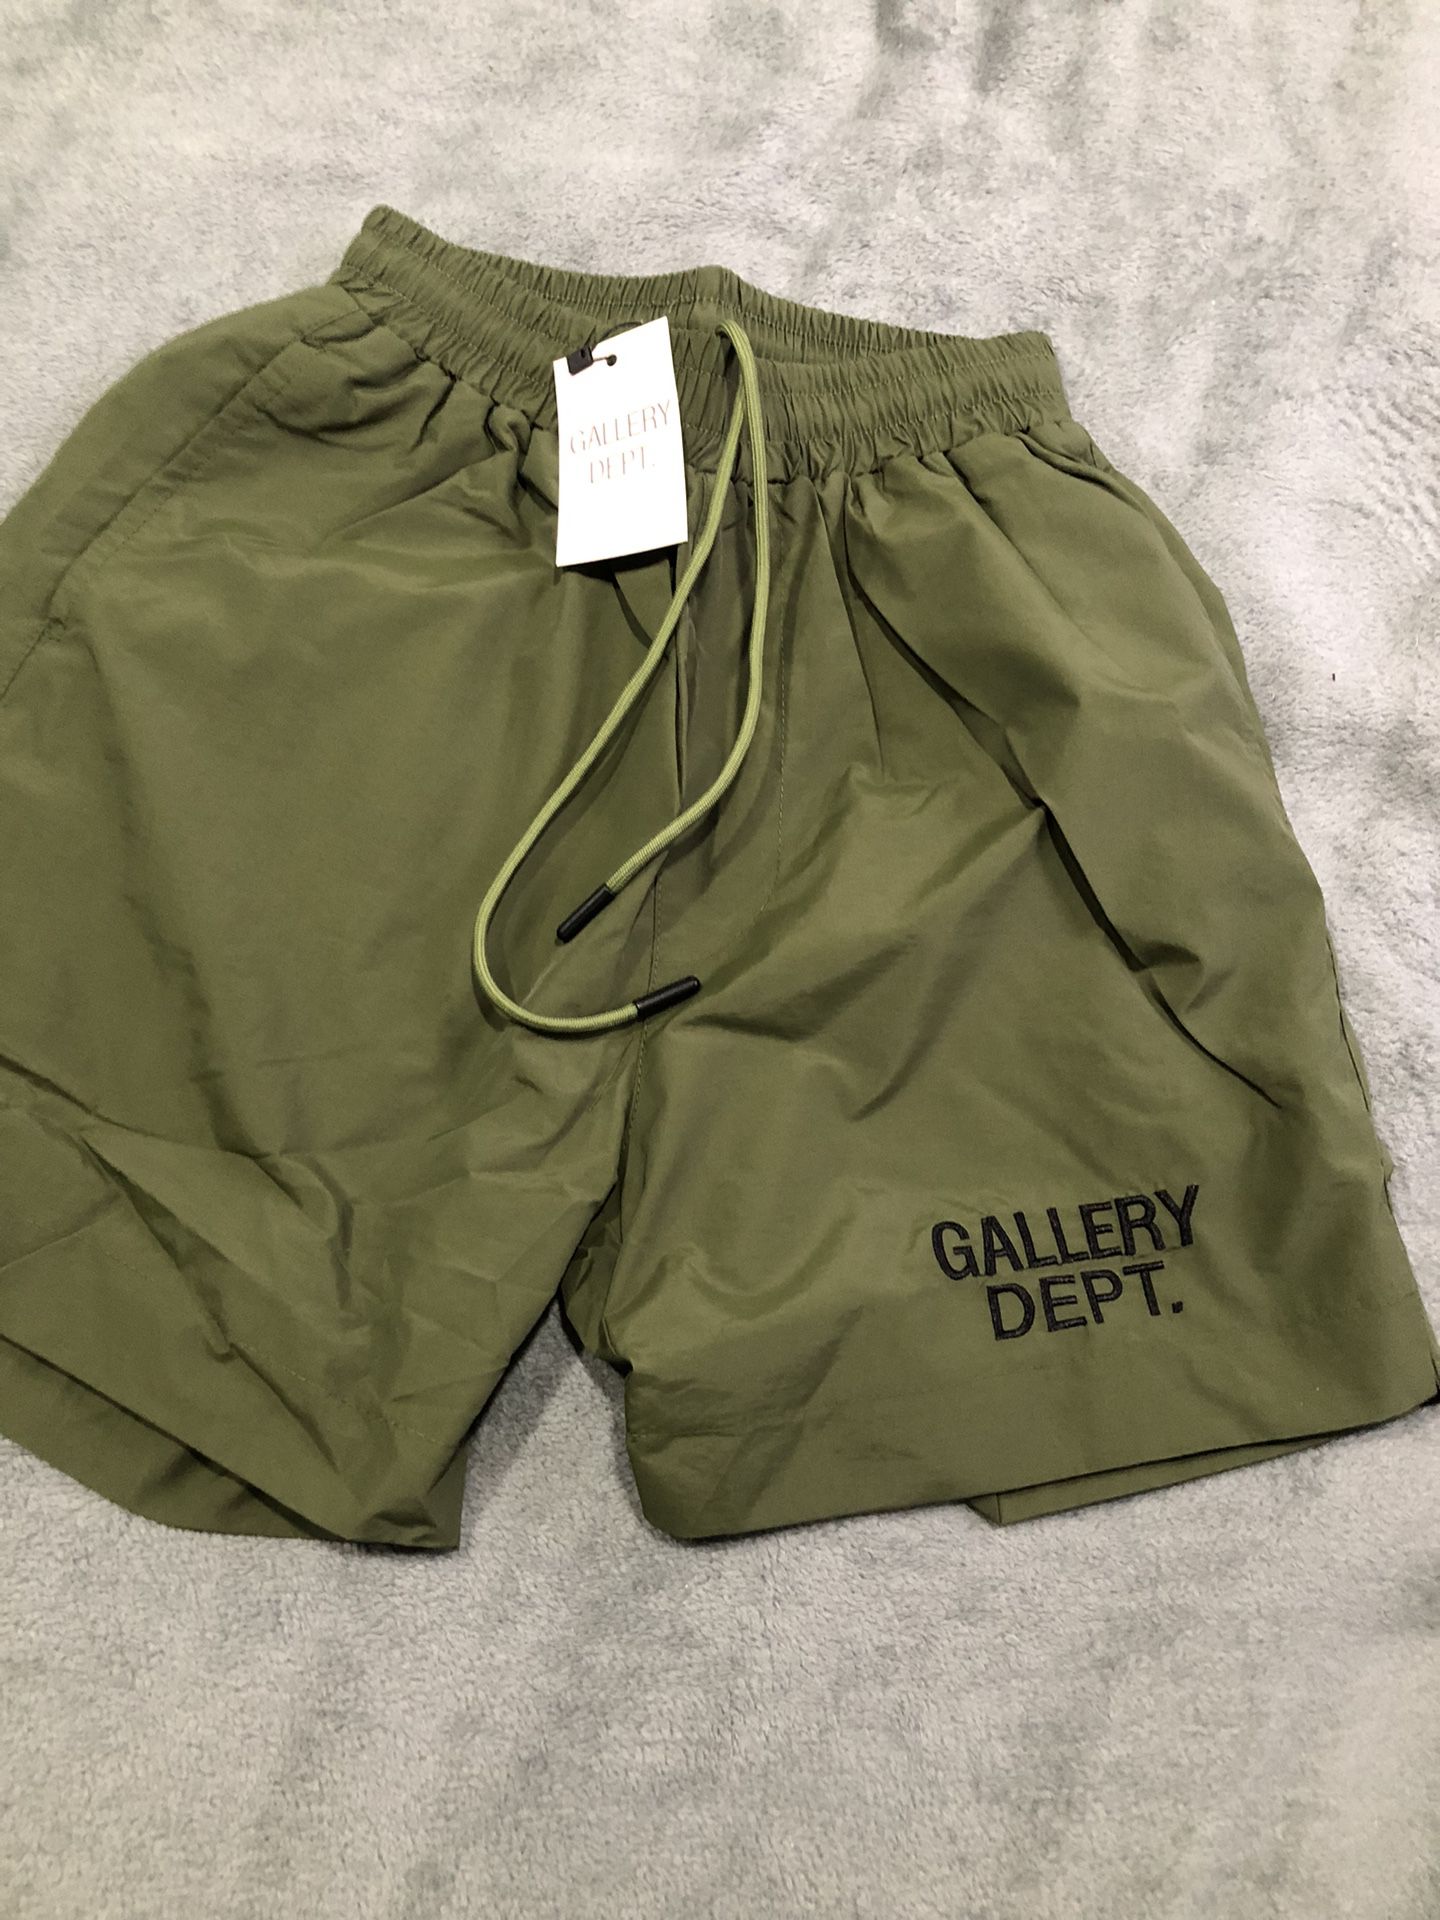 Green Gallery Dept Shorts.       S,m,l,xl